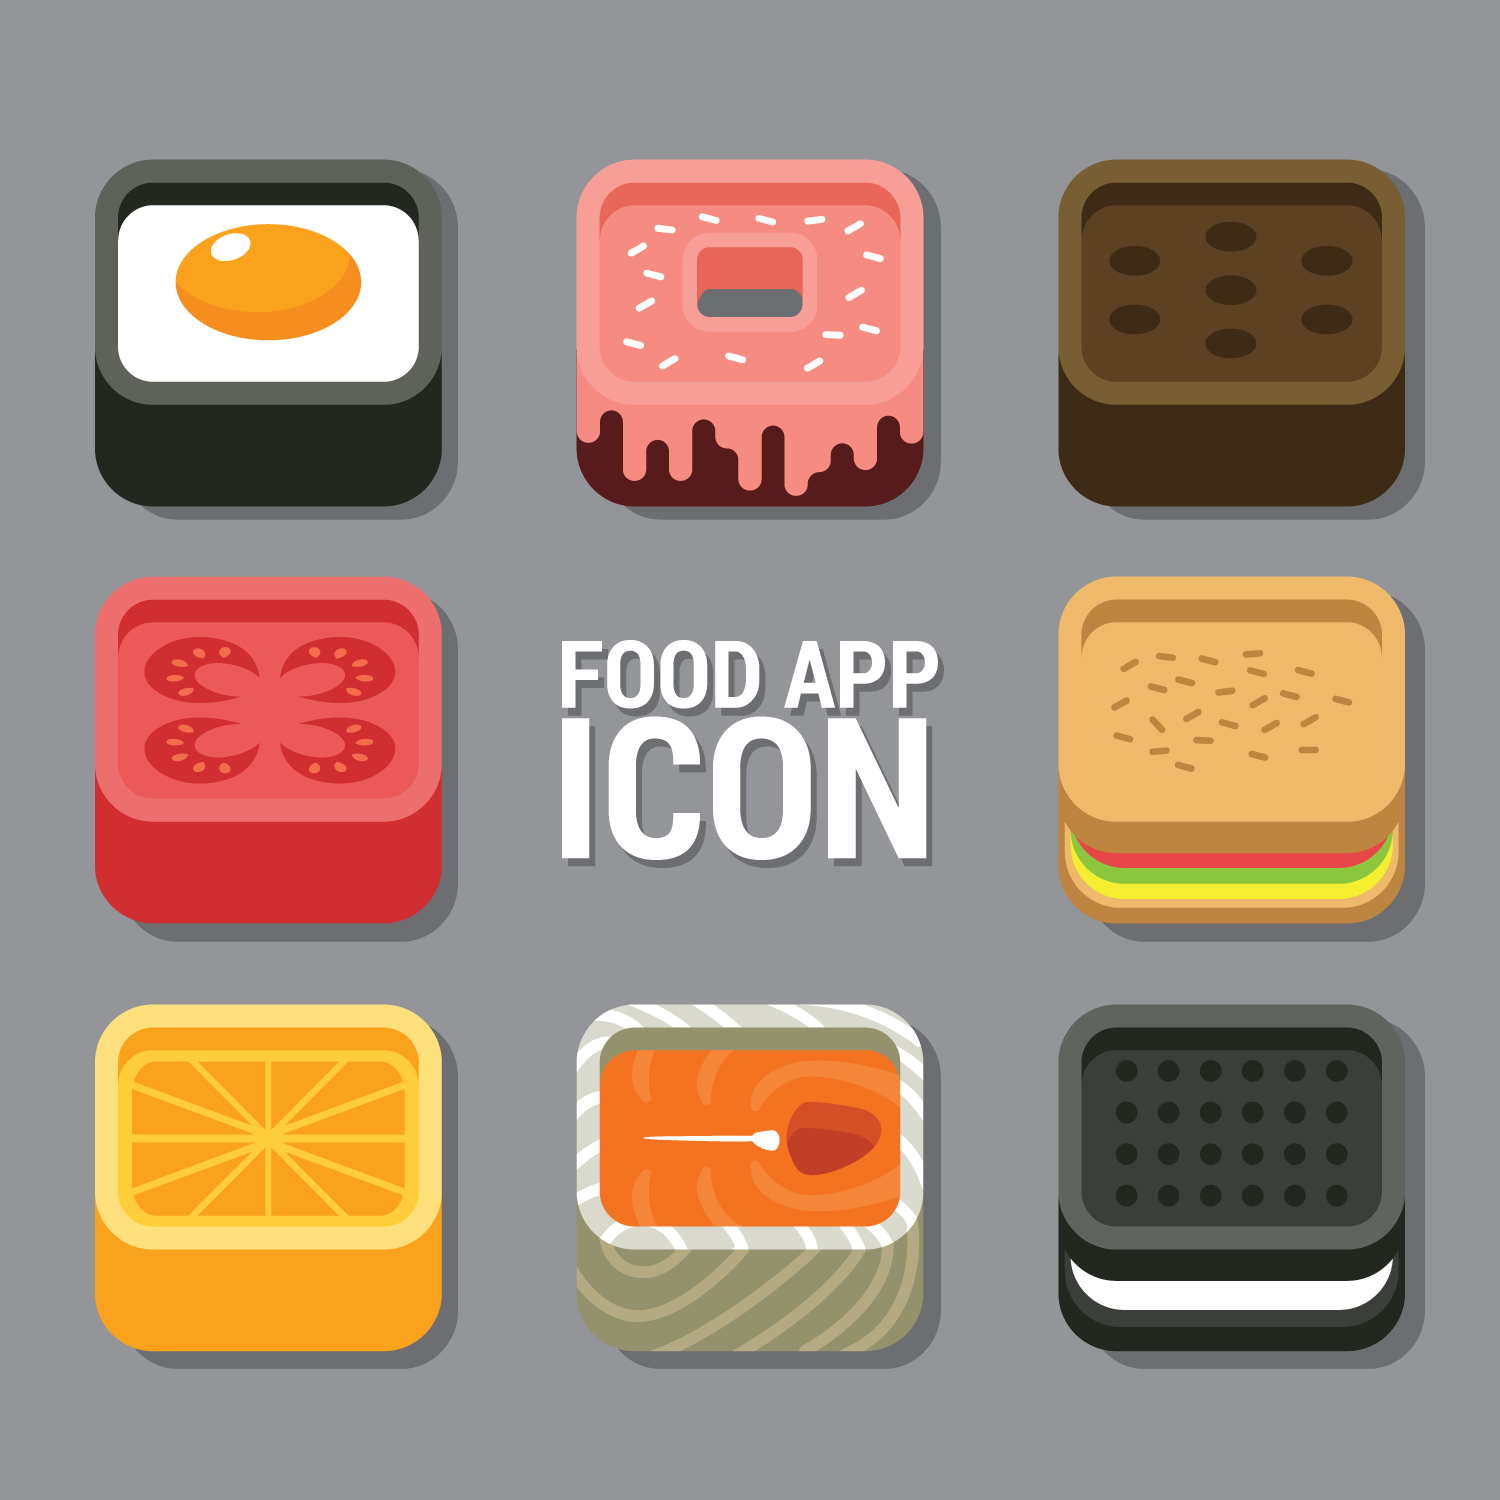 Download Food App Icon 184642 - Download Free Vectors, Clipart ...